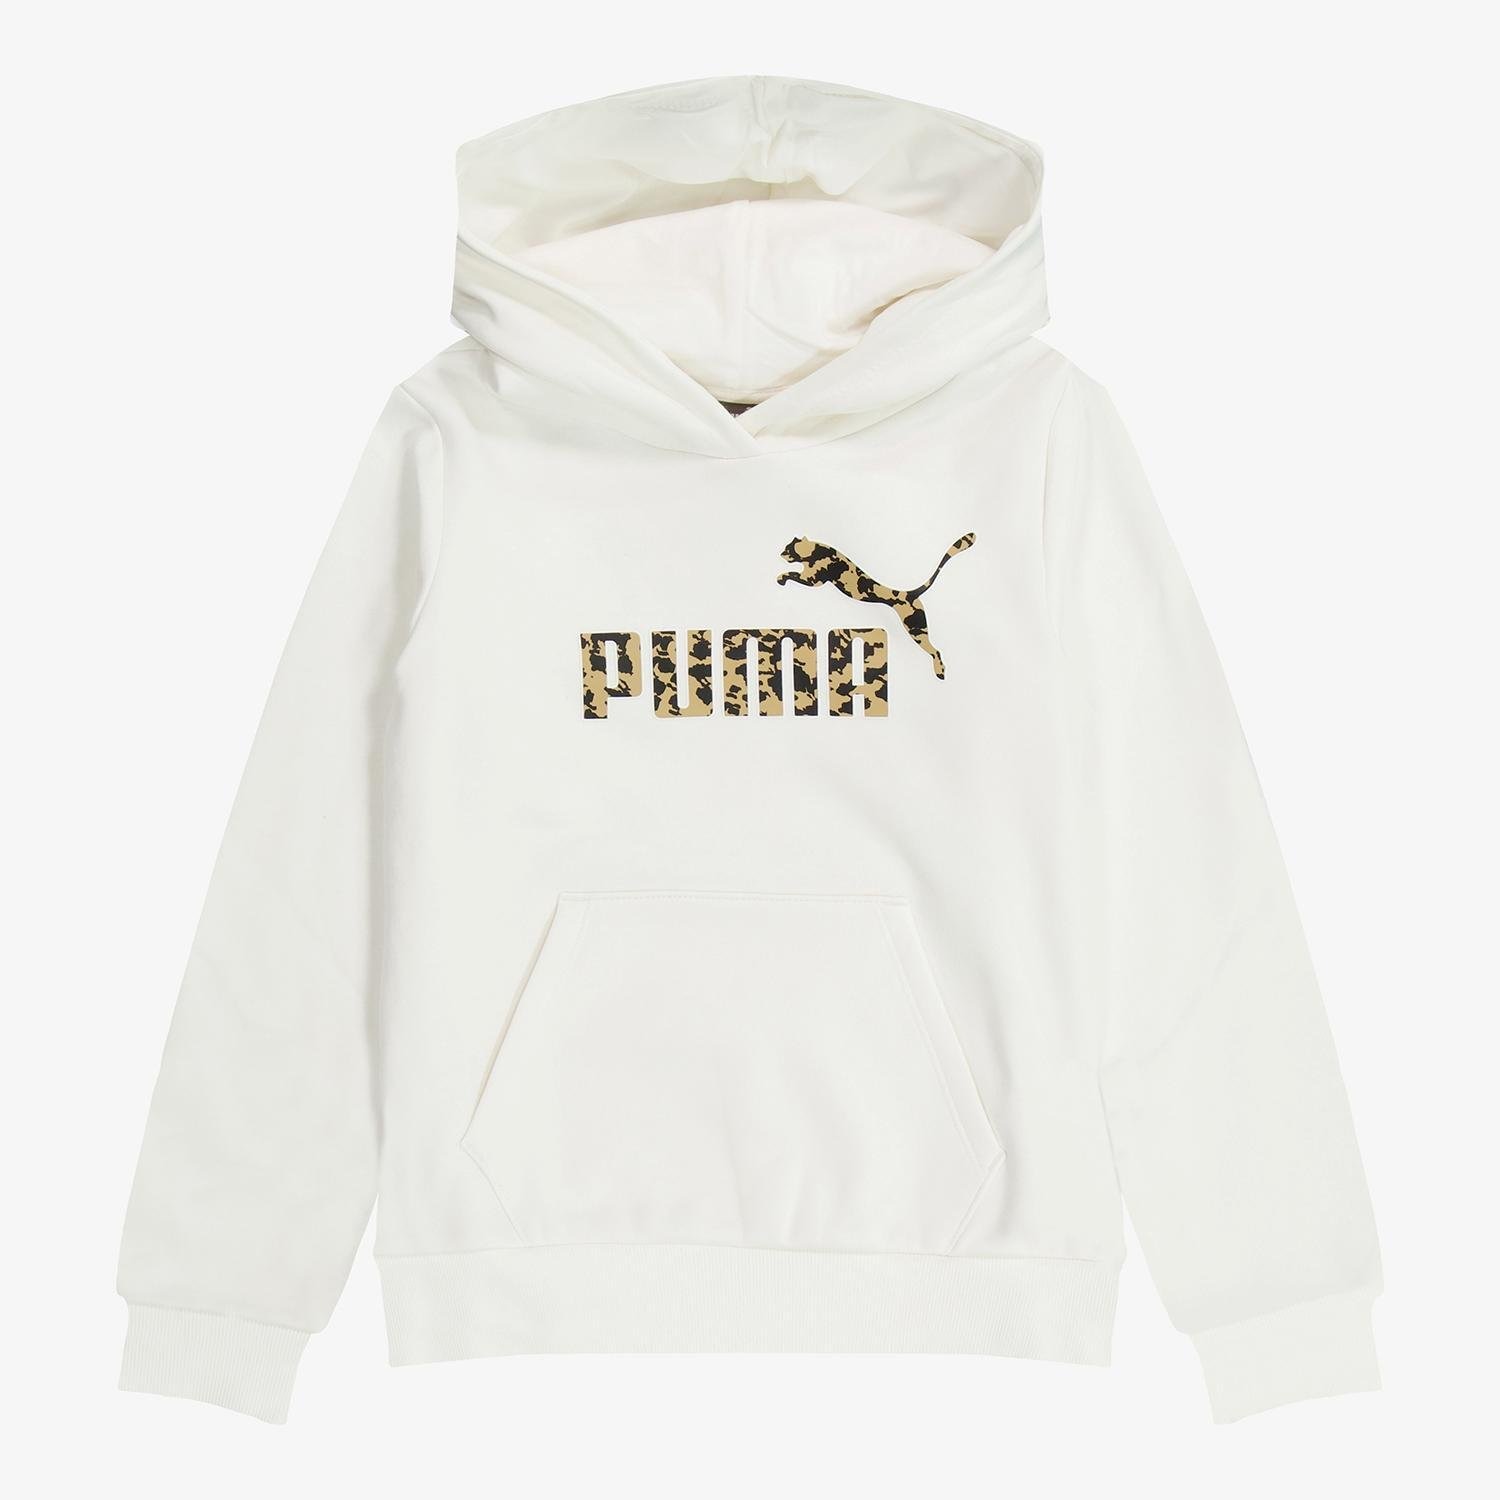 Puma Puma trui wit kinderen kinderen